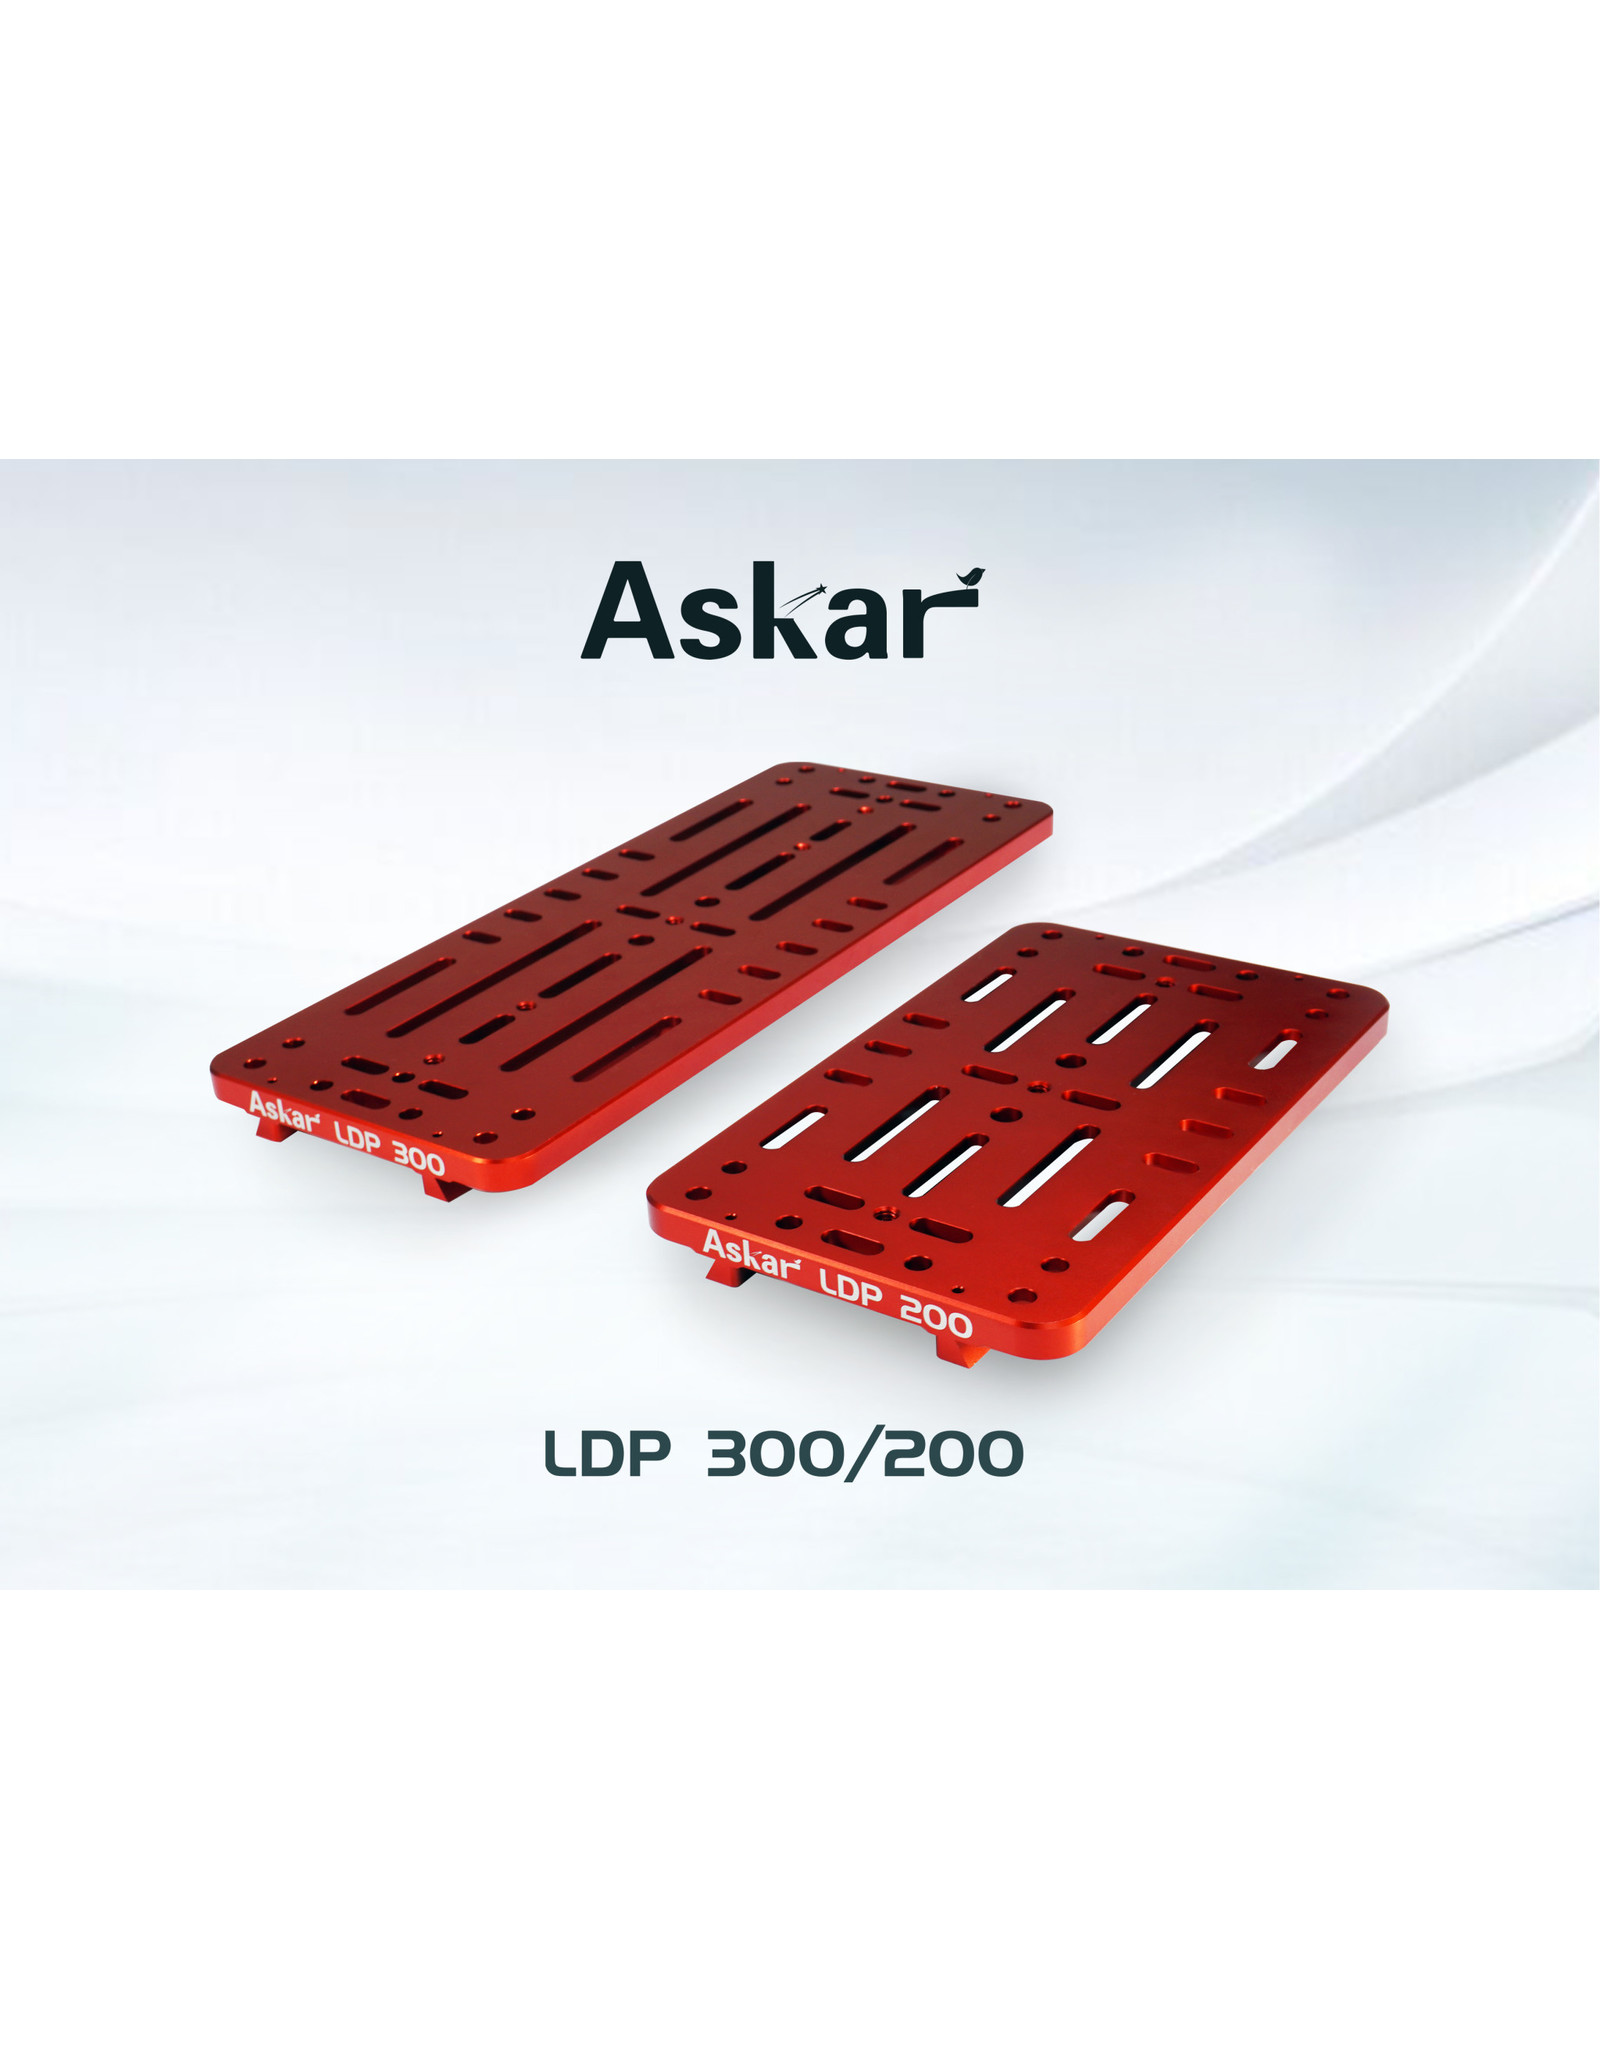 Askar Askar Losmandy-Style Universal Dovetail Plate - SPECIFY Length - LDPXXX